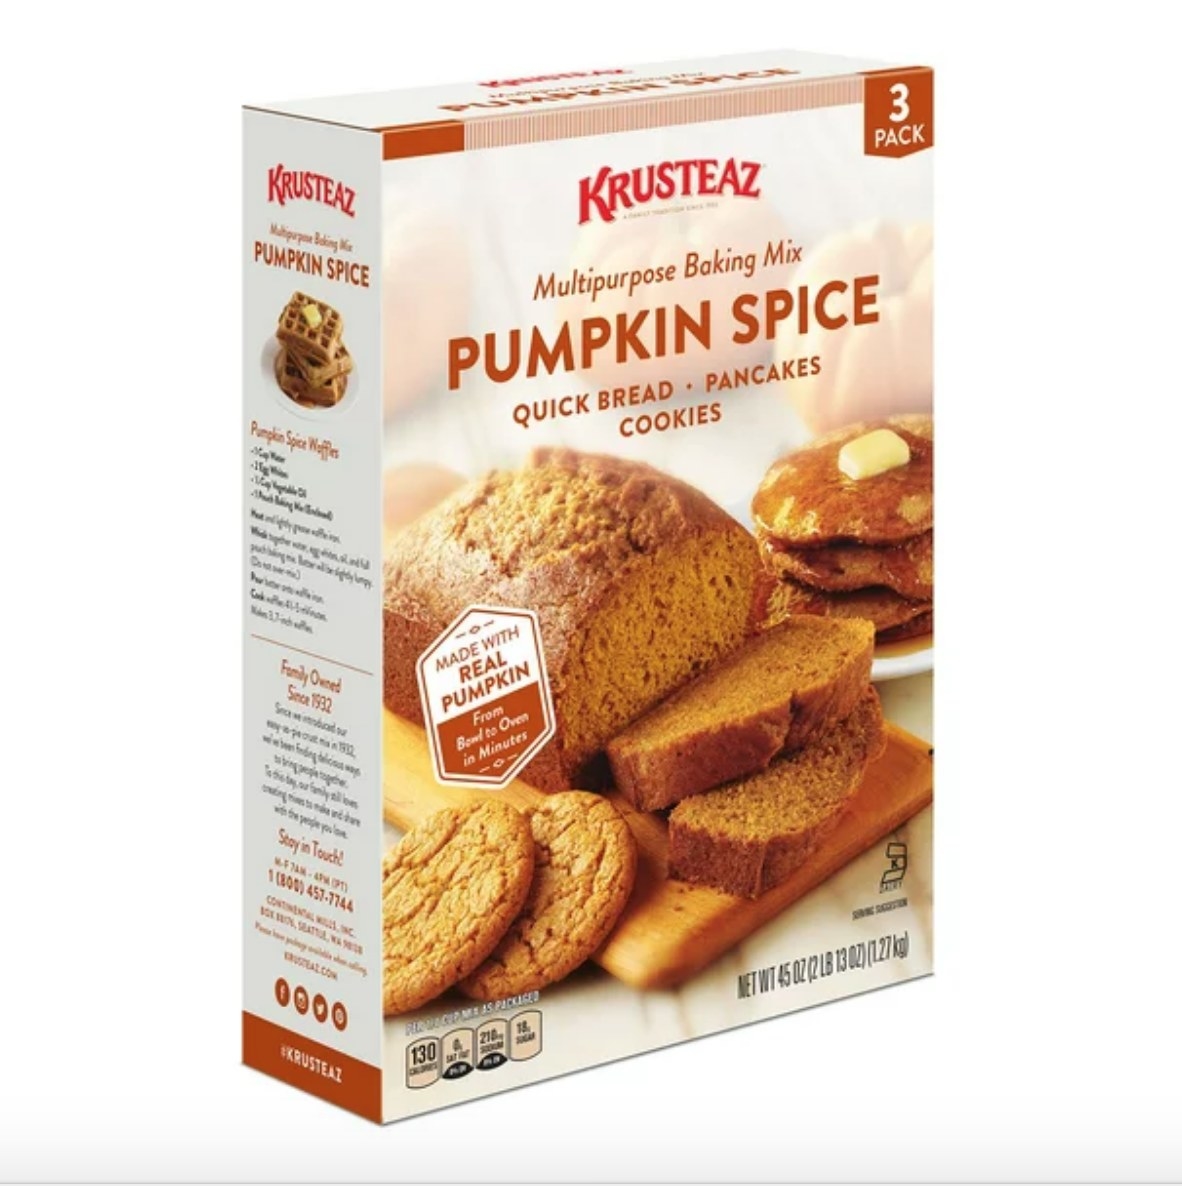 Box of Krusteaz pumpkin spice baking mix